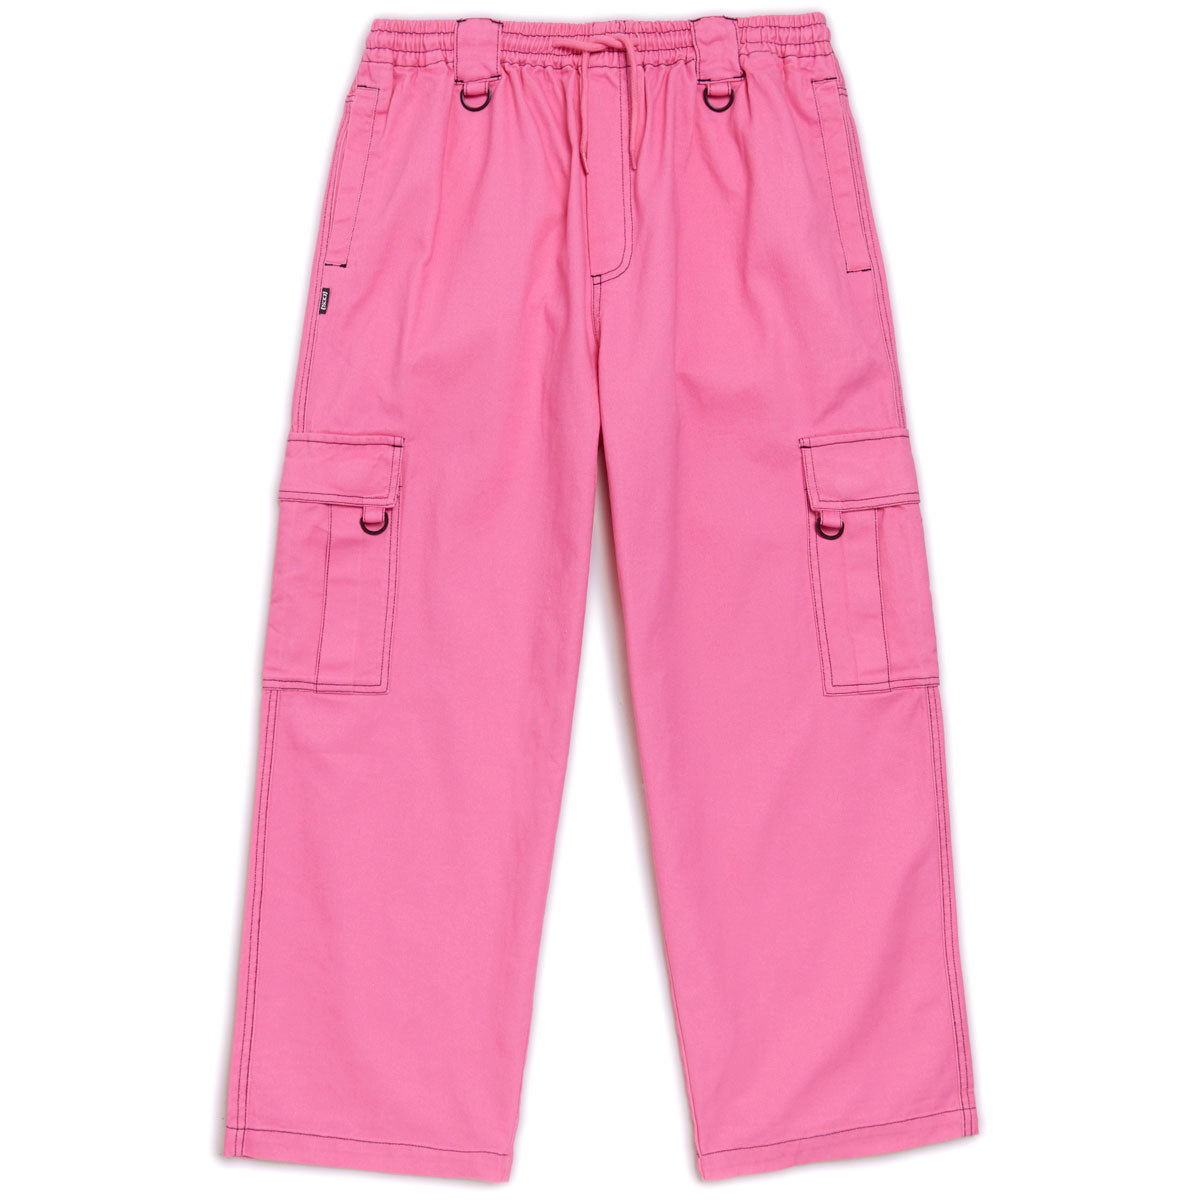 CCS Titus Twill Cargo Pants - Pink/Black image 4